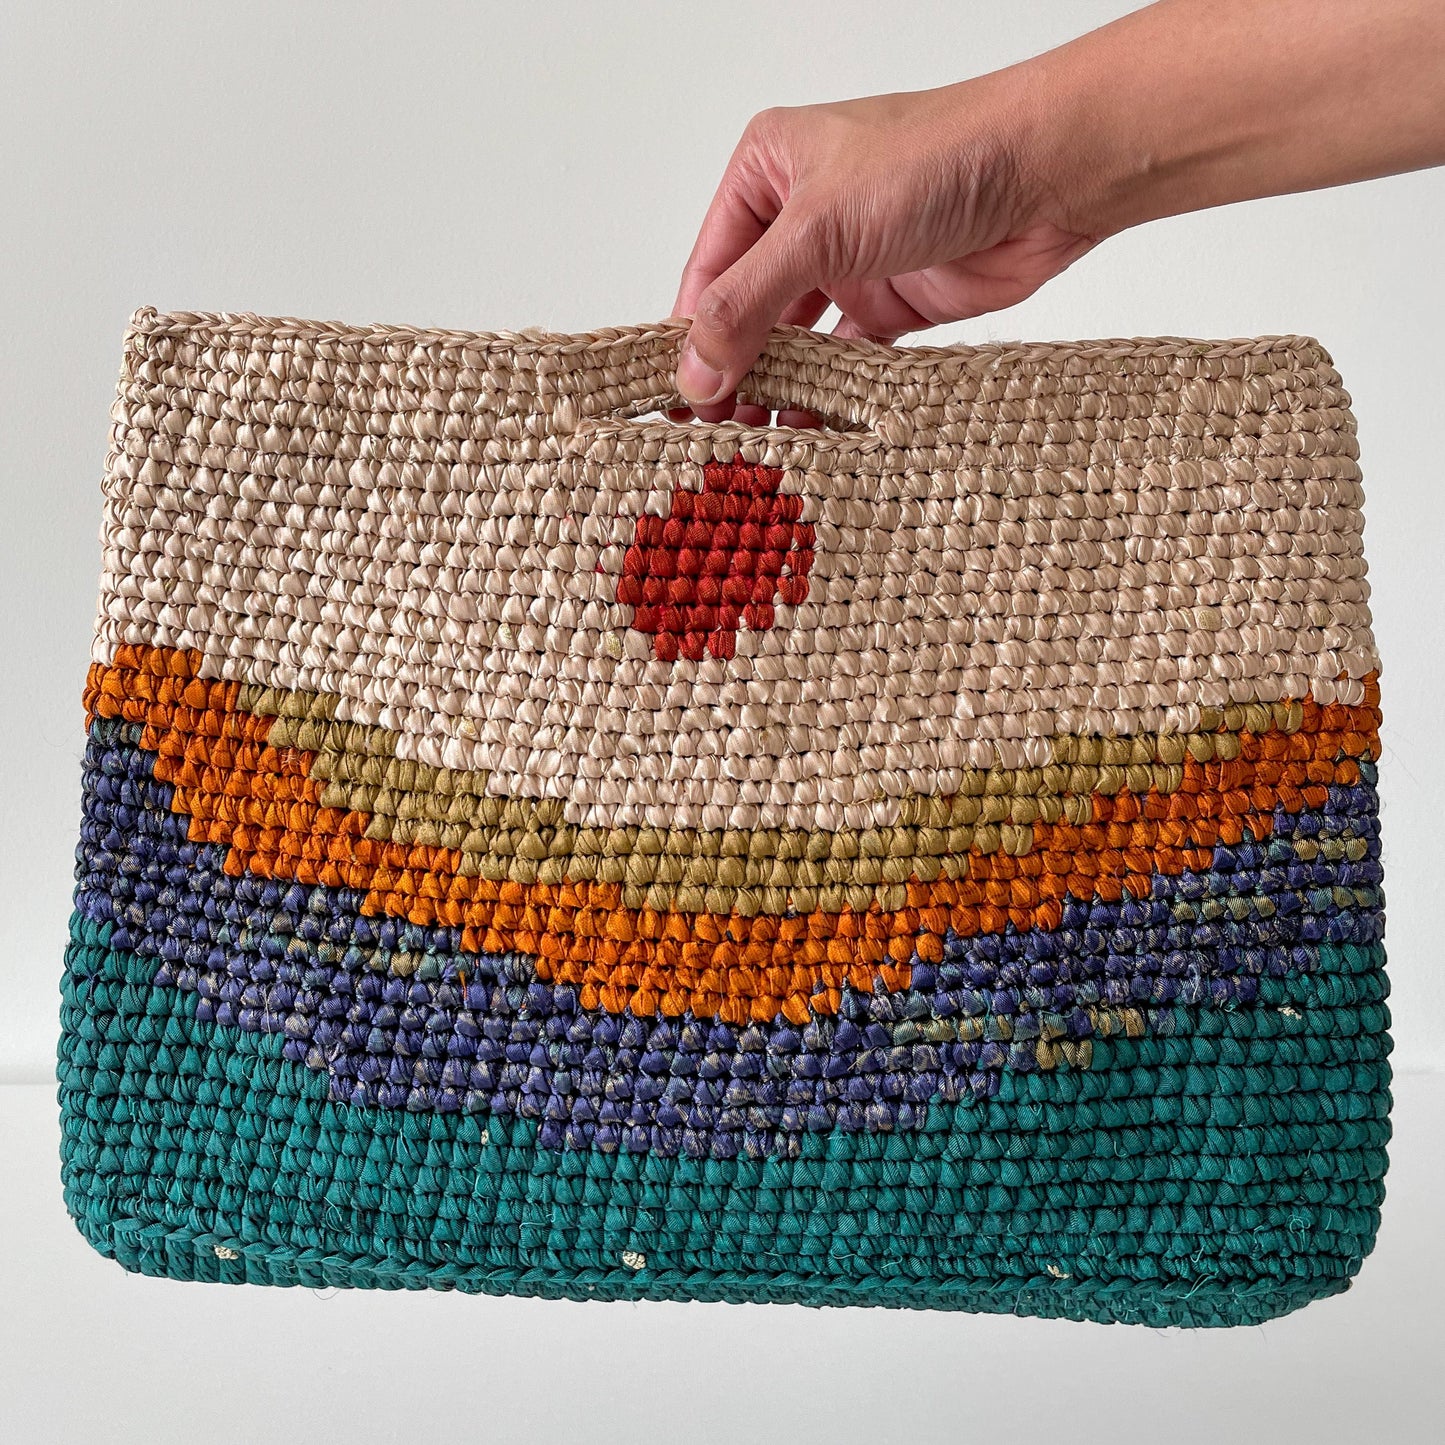 handmade bag from upcycled saree